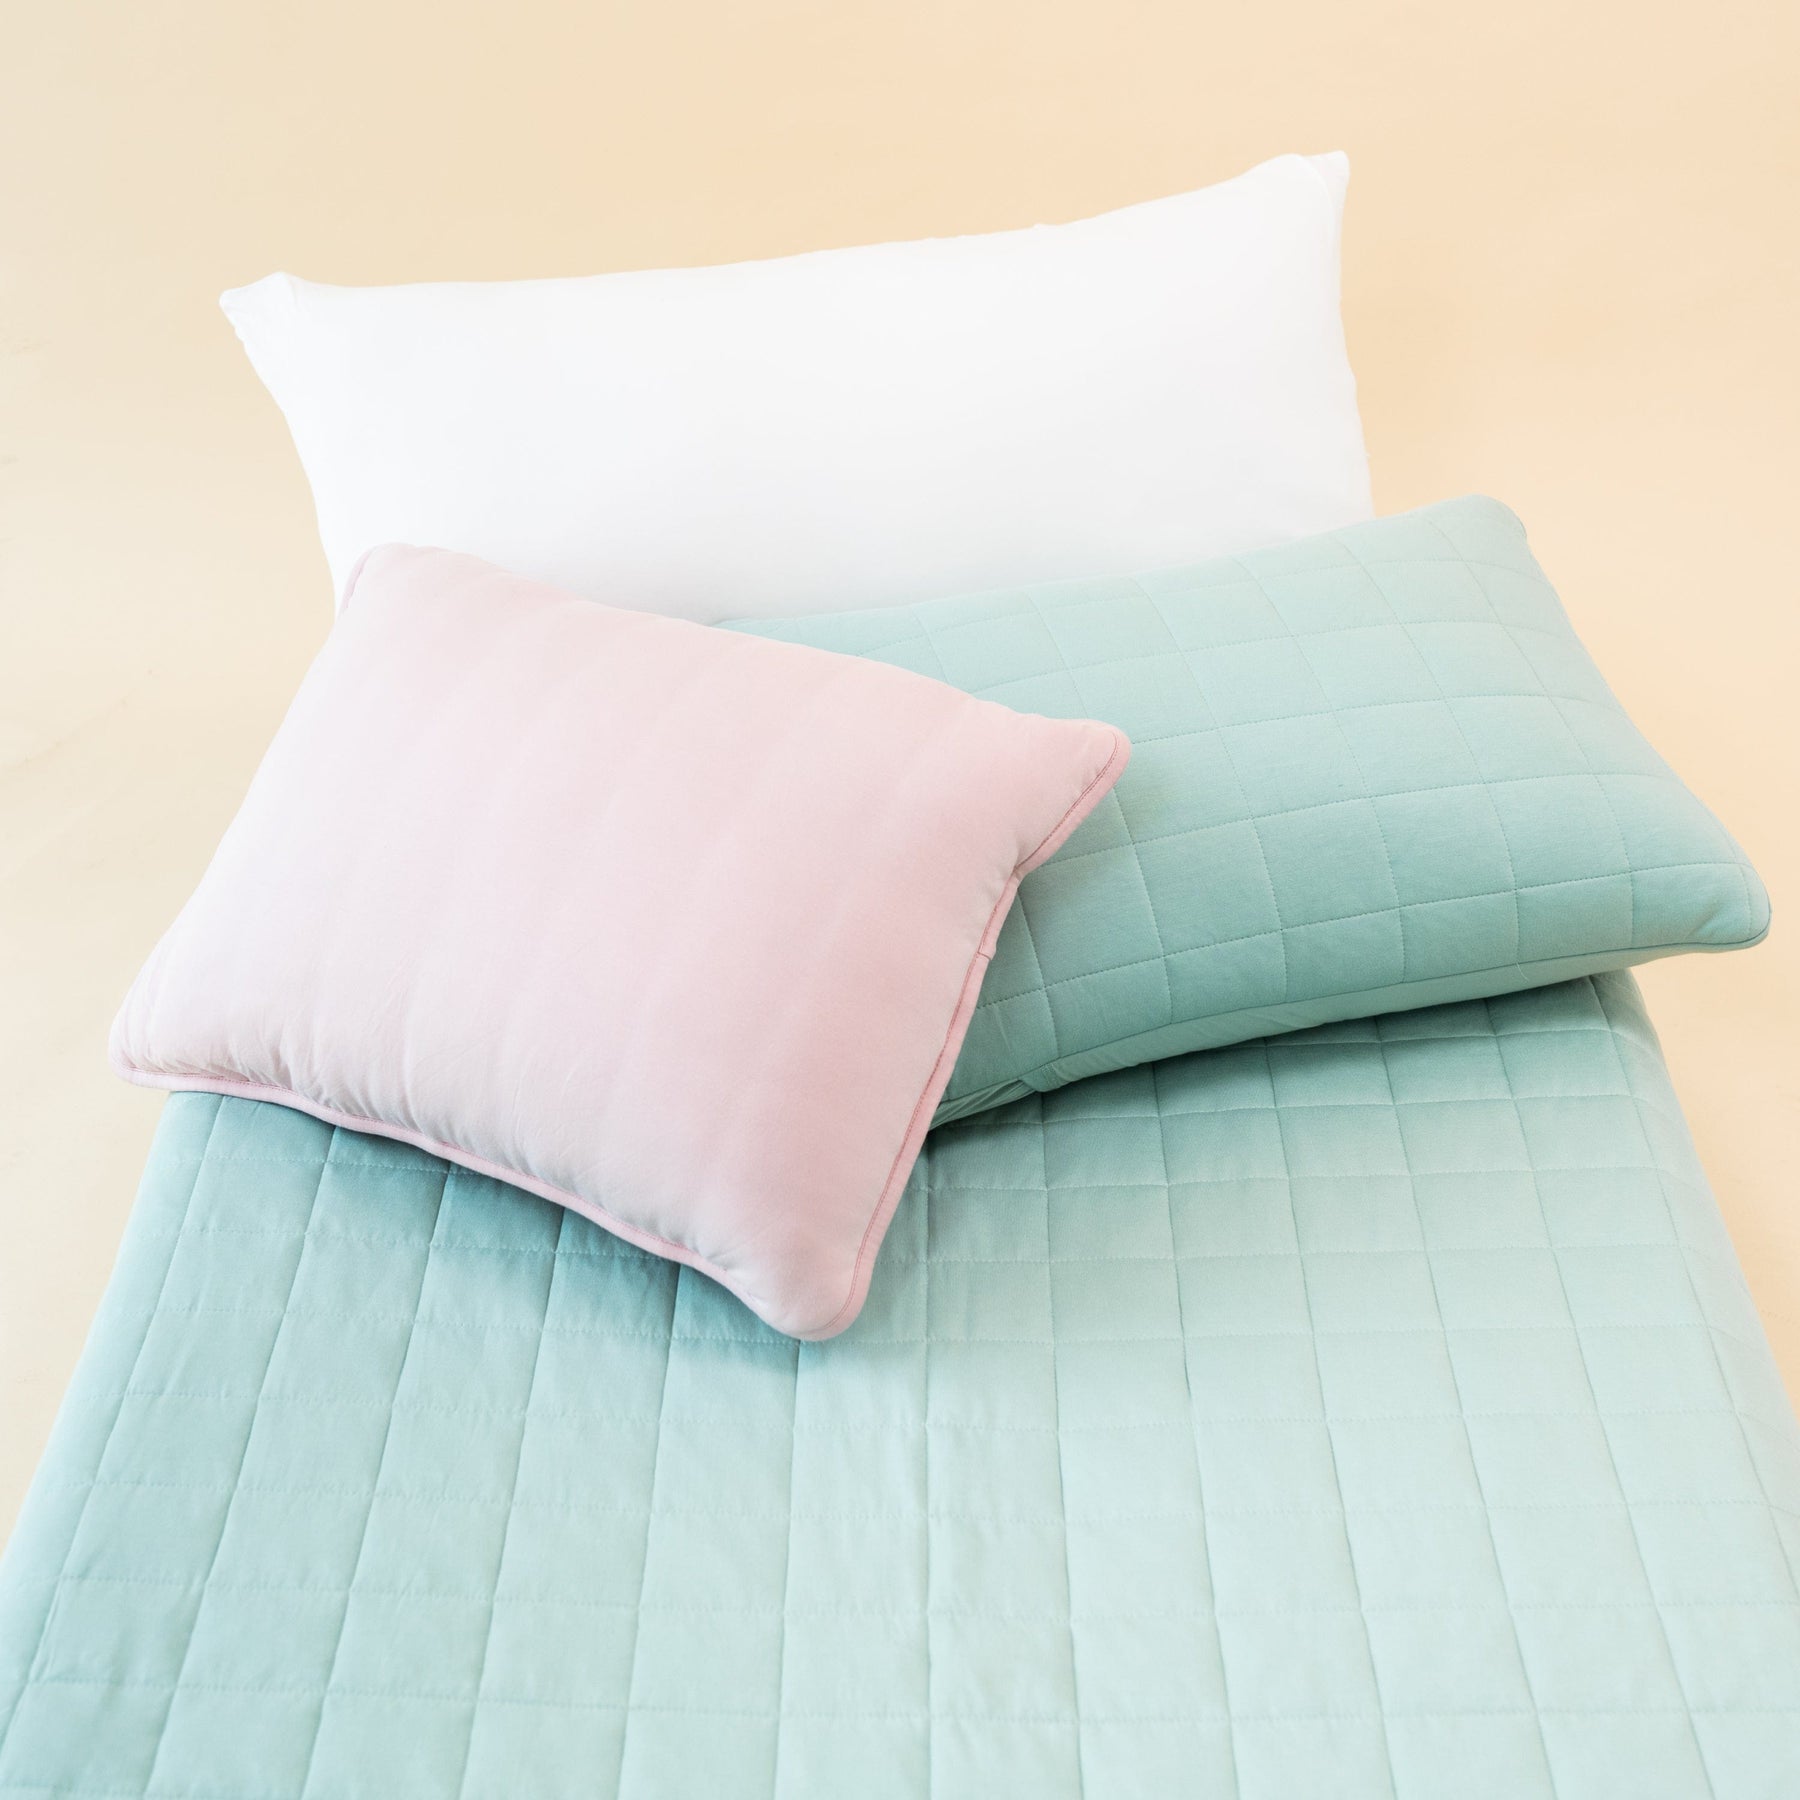 Kyte Baby Standard Pillow Case Blush / Standard Standard Pillowcase in Blush